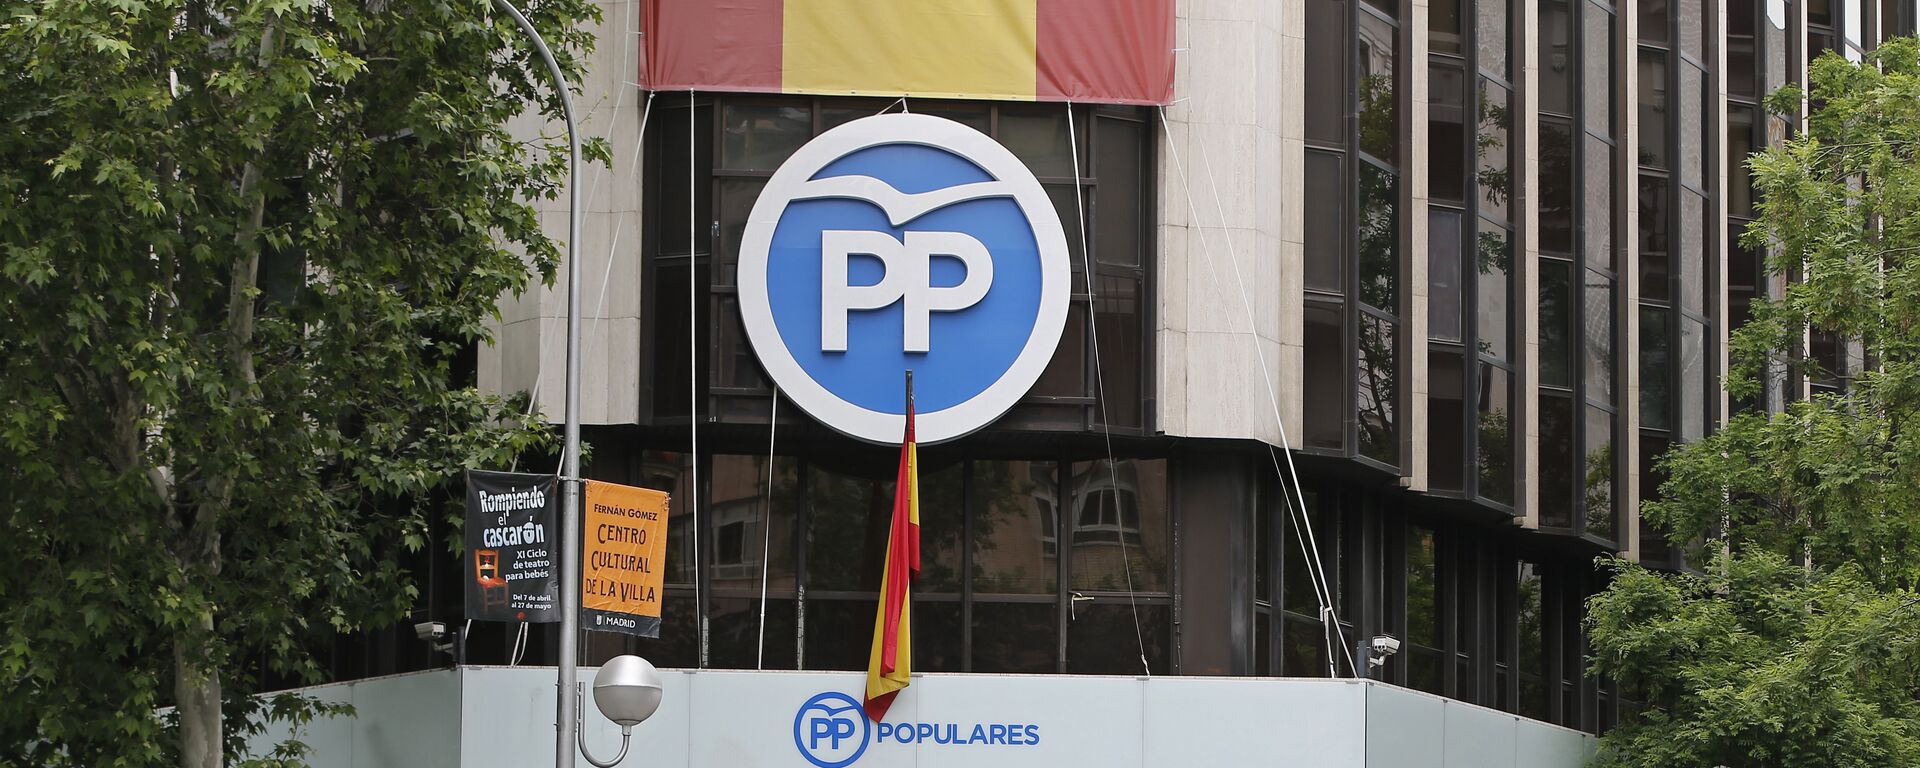 Logo del Partido Popular (PP) - Sputnik Mundo, 1920, 28.05.2021